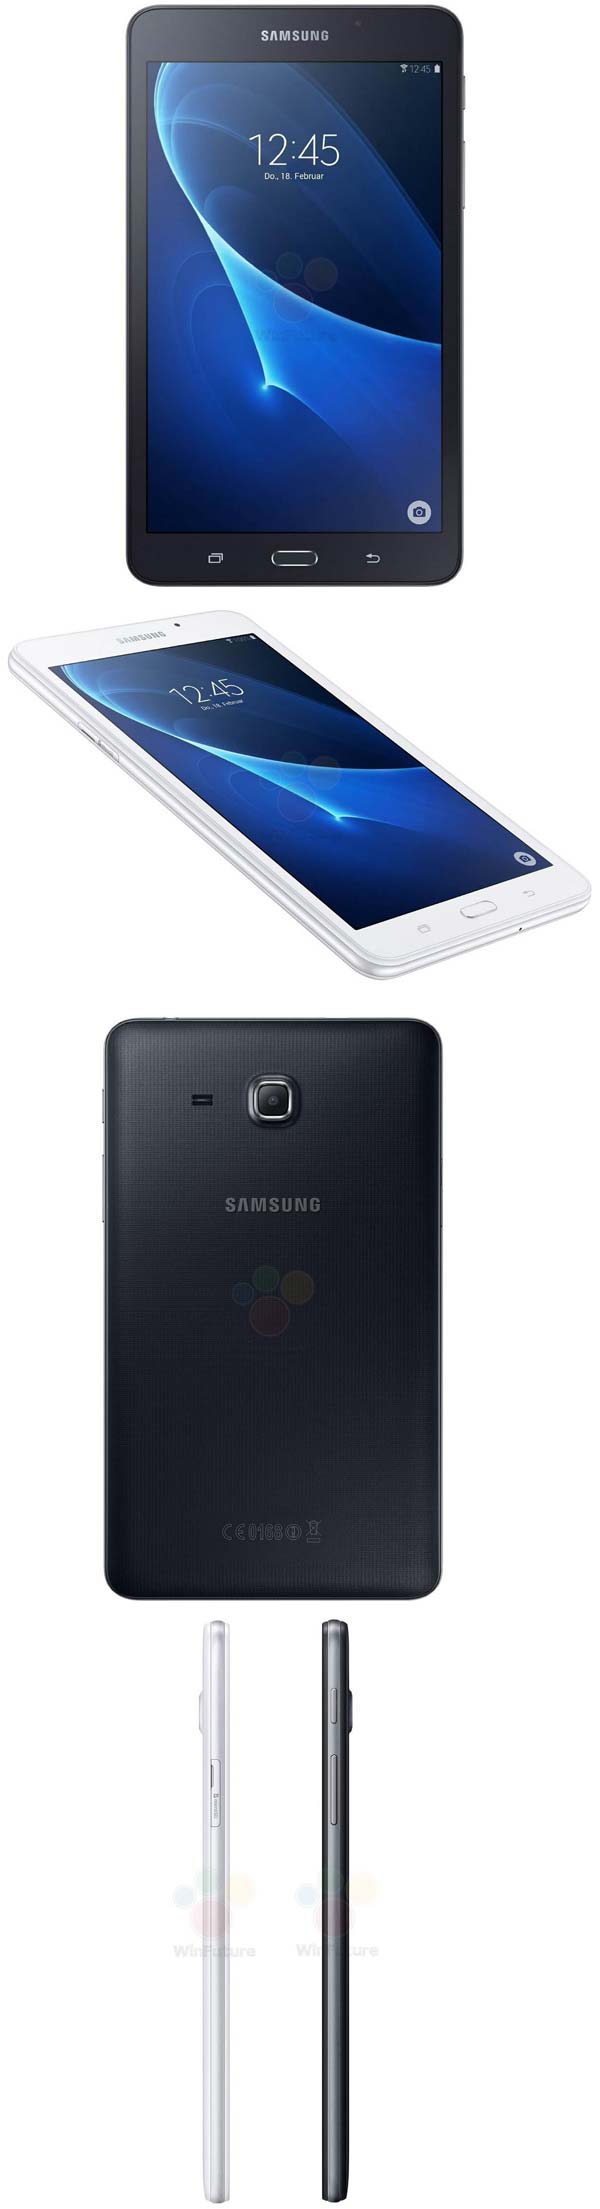 Samsung Galaxy Tab 7.0 во всей красе